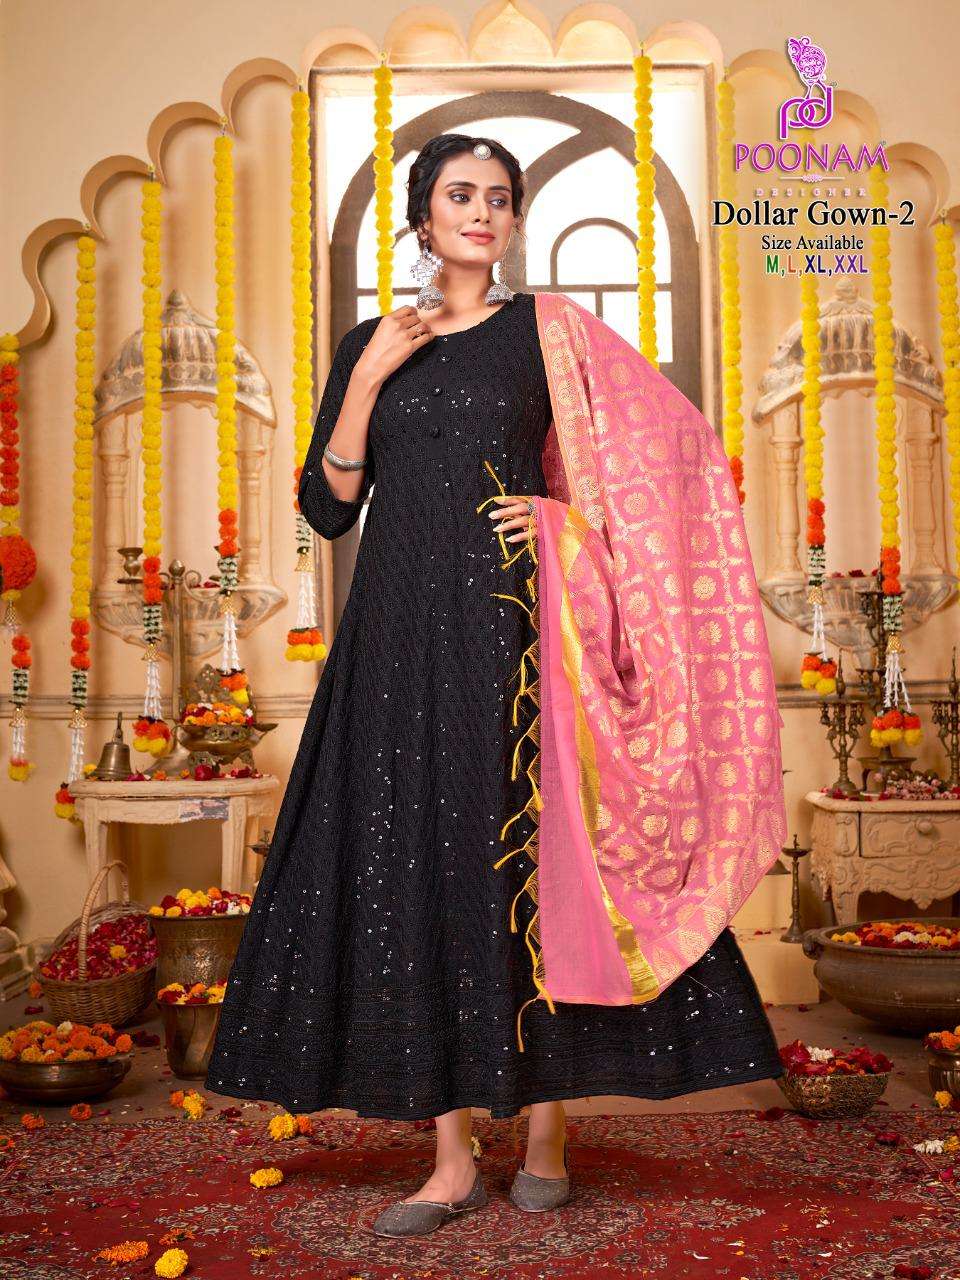 poonam designer dollar gown vol-2 1001-1008 stylish designer gown with dupatta catalogue at best price surat 